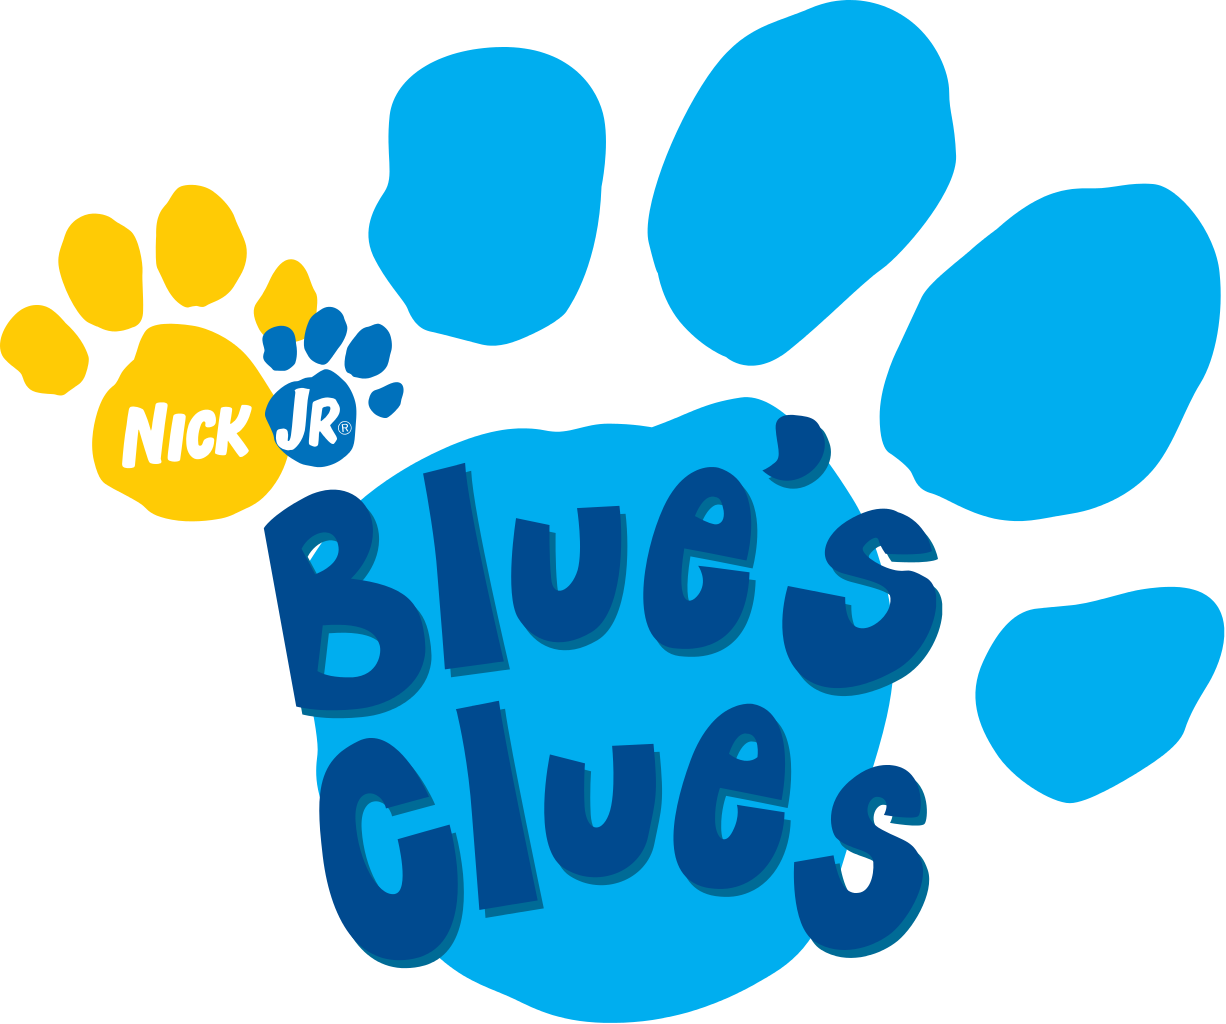 Fileblues Clues Logo - Nick Jr Shows Logos (1226x1024)